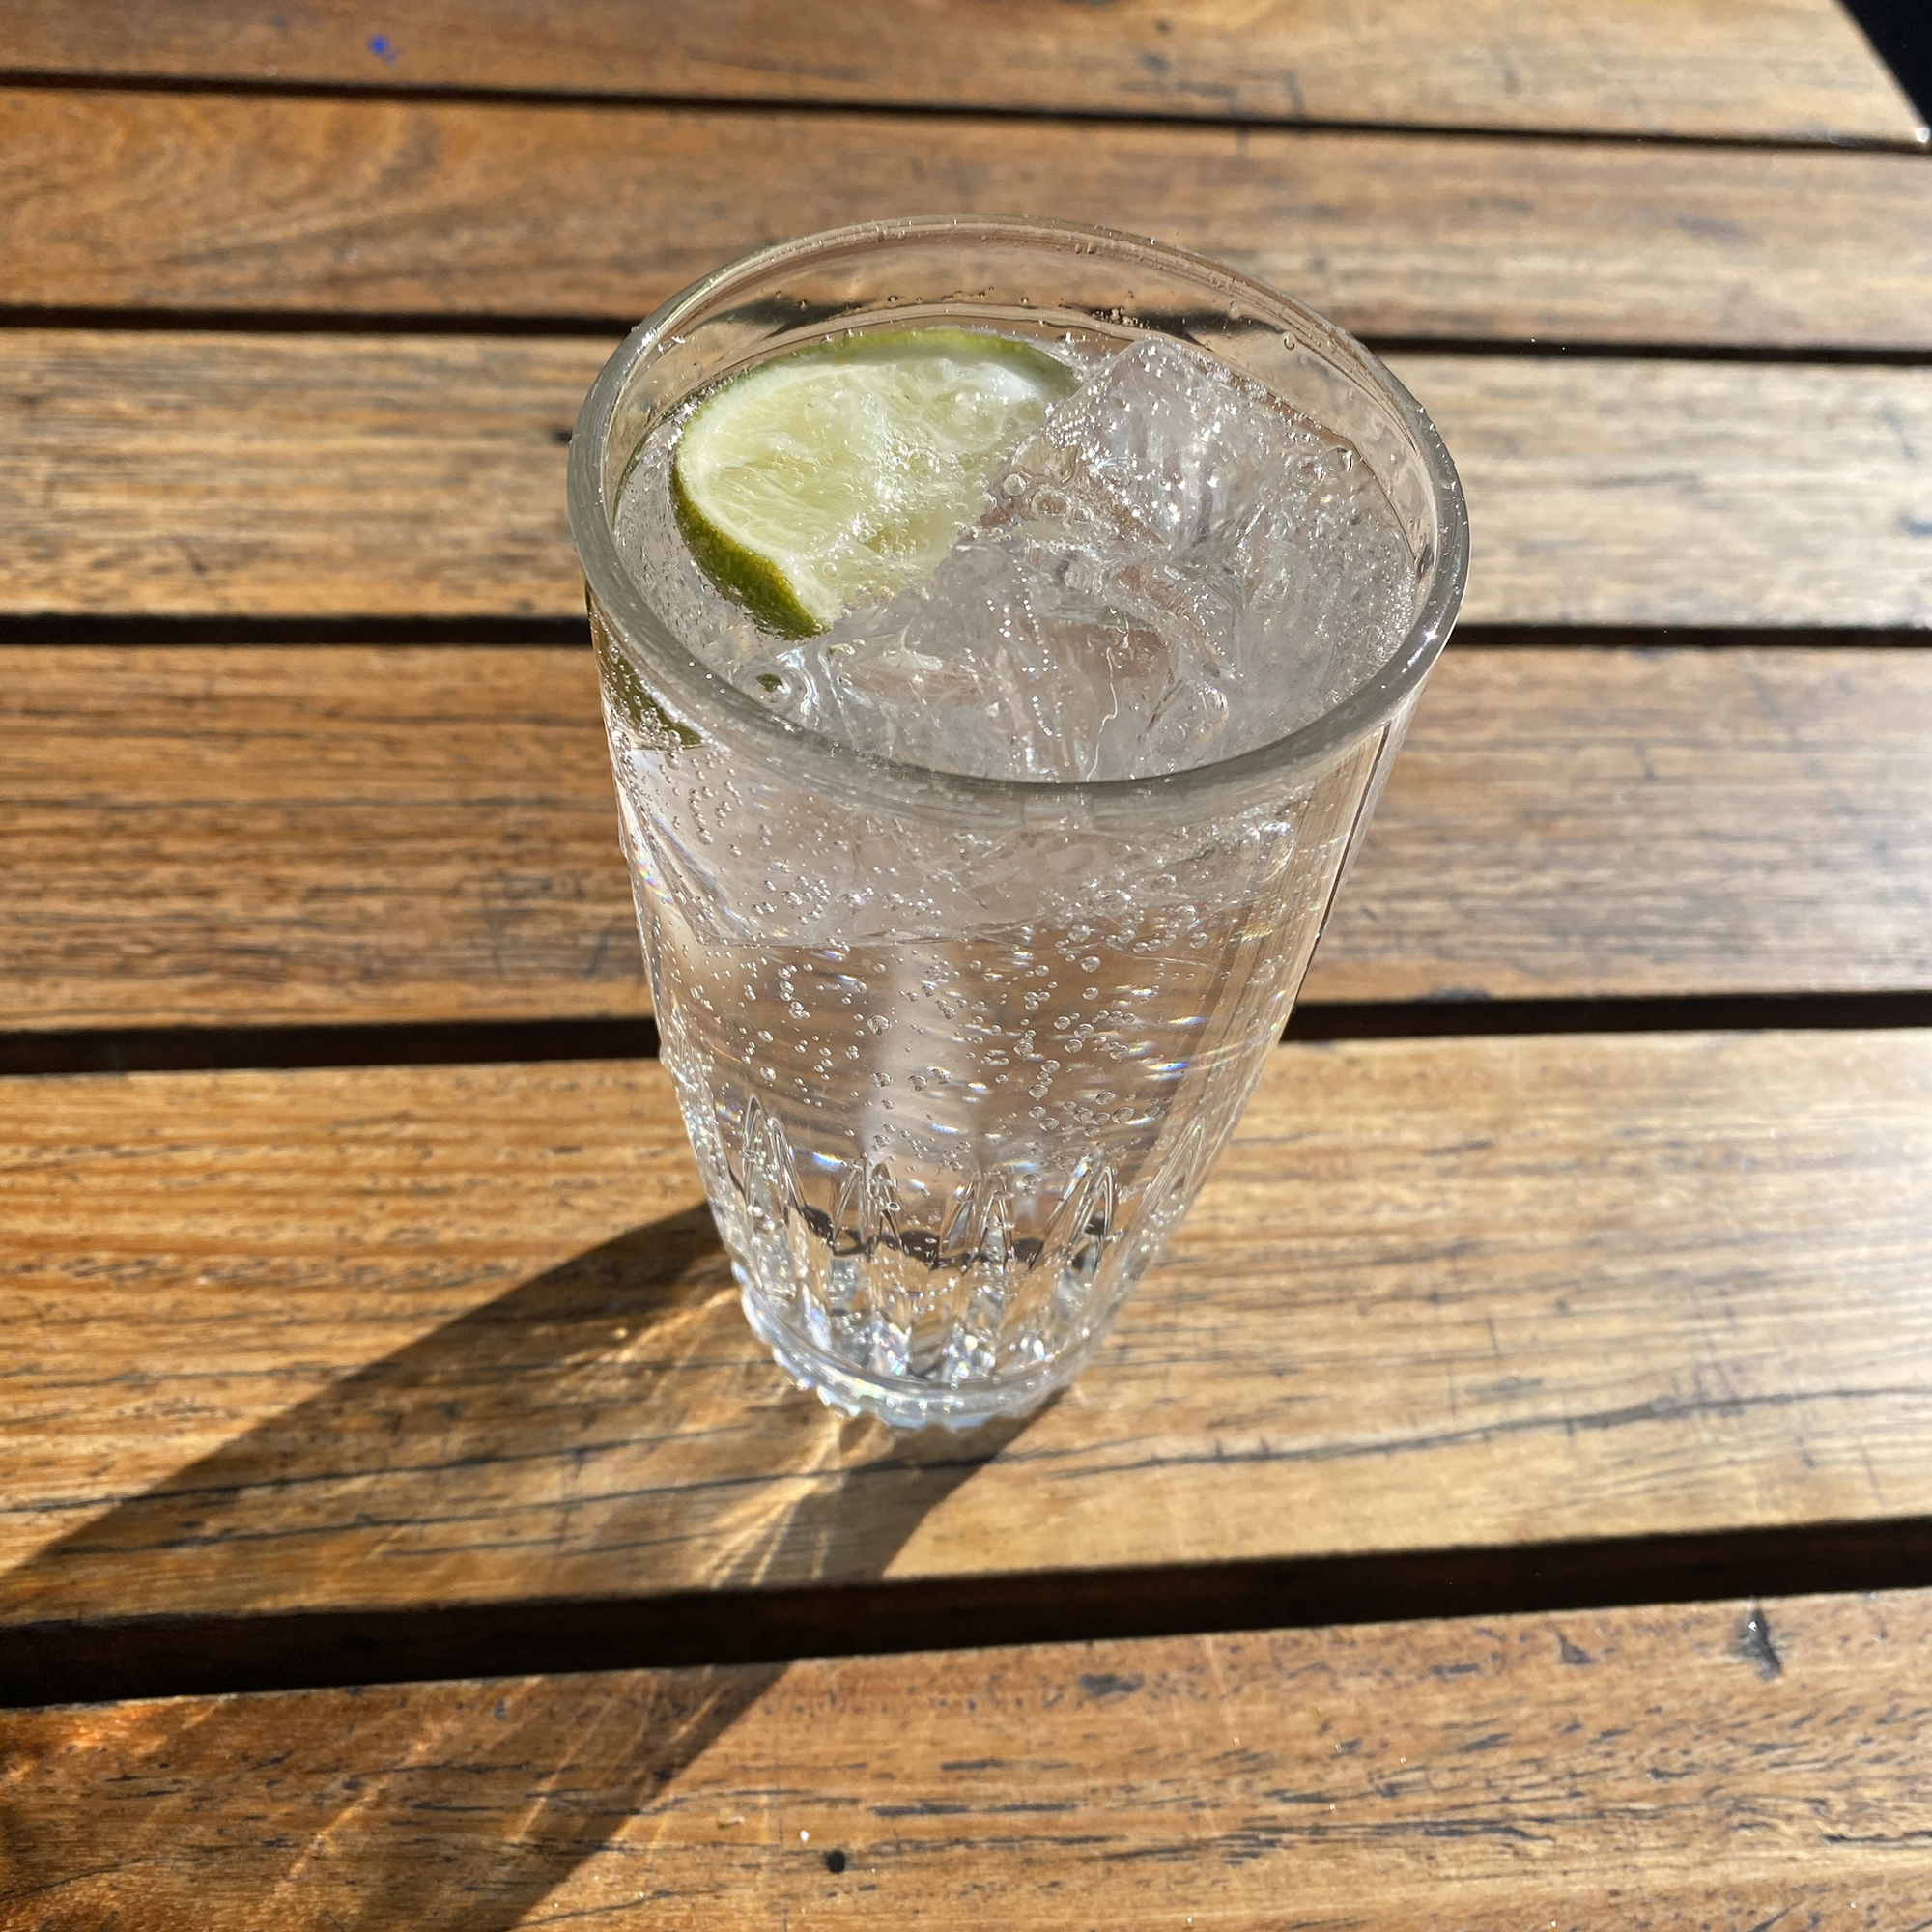 free mineral water at dr morse - so refreshing